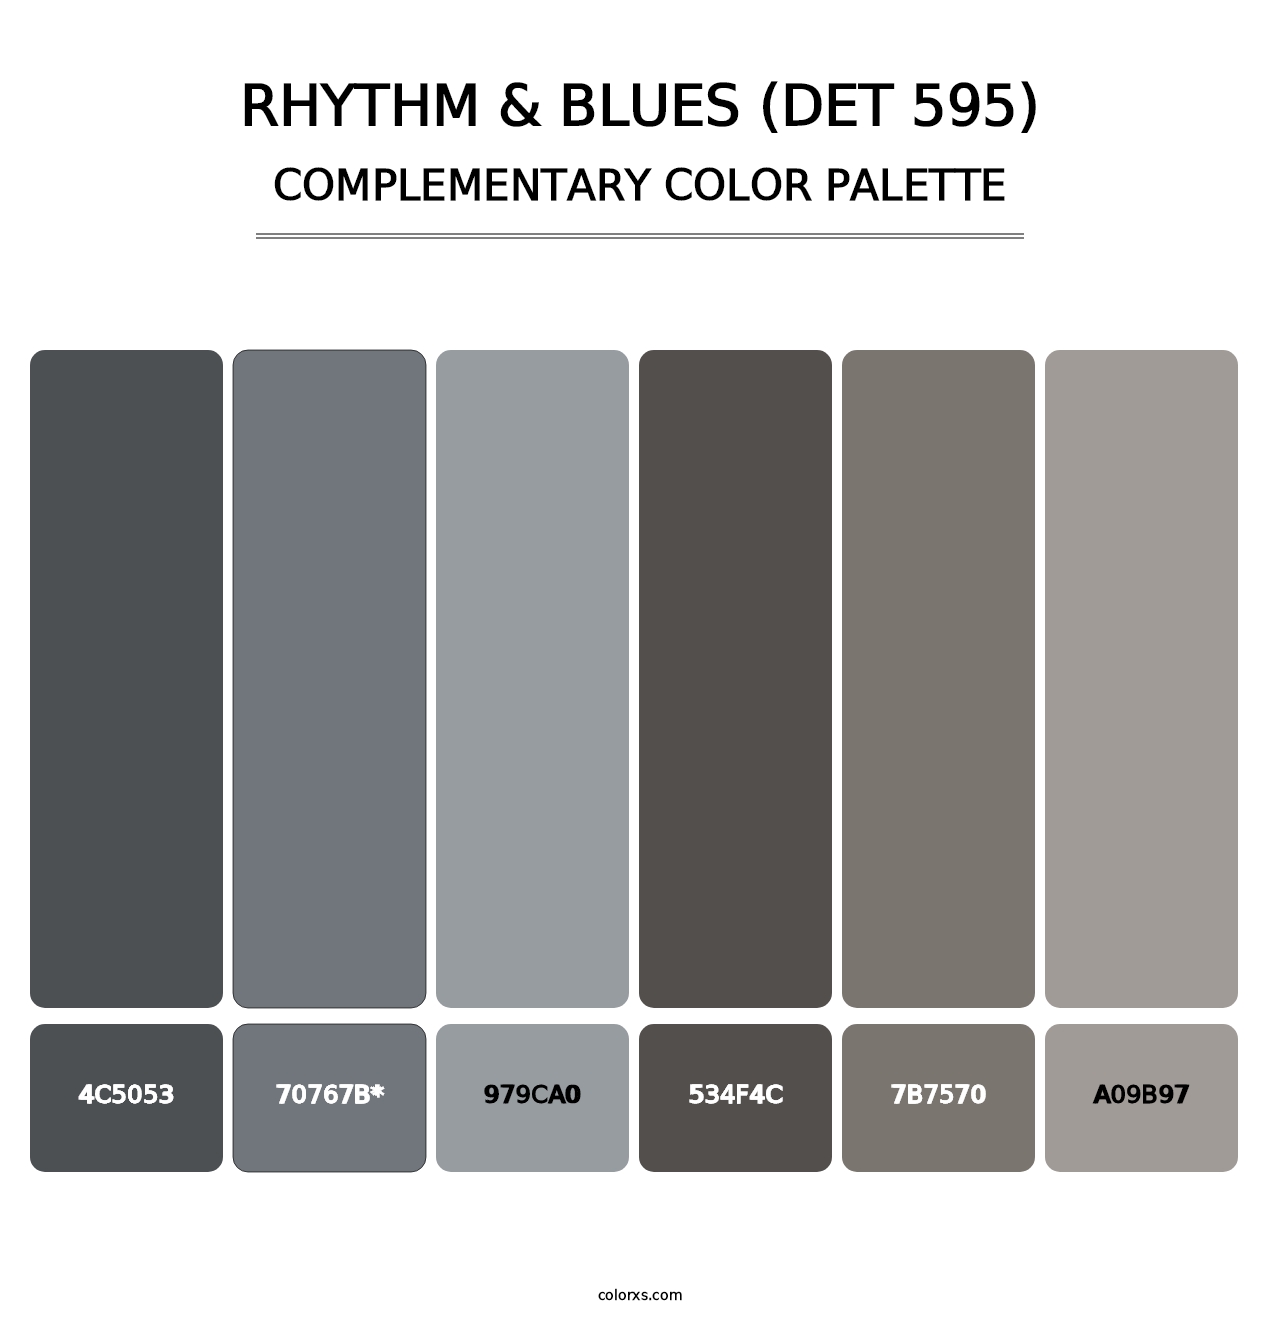 Rhythm & Blues (DET 595) - Complementary Color Palette